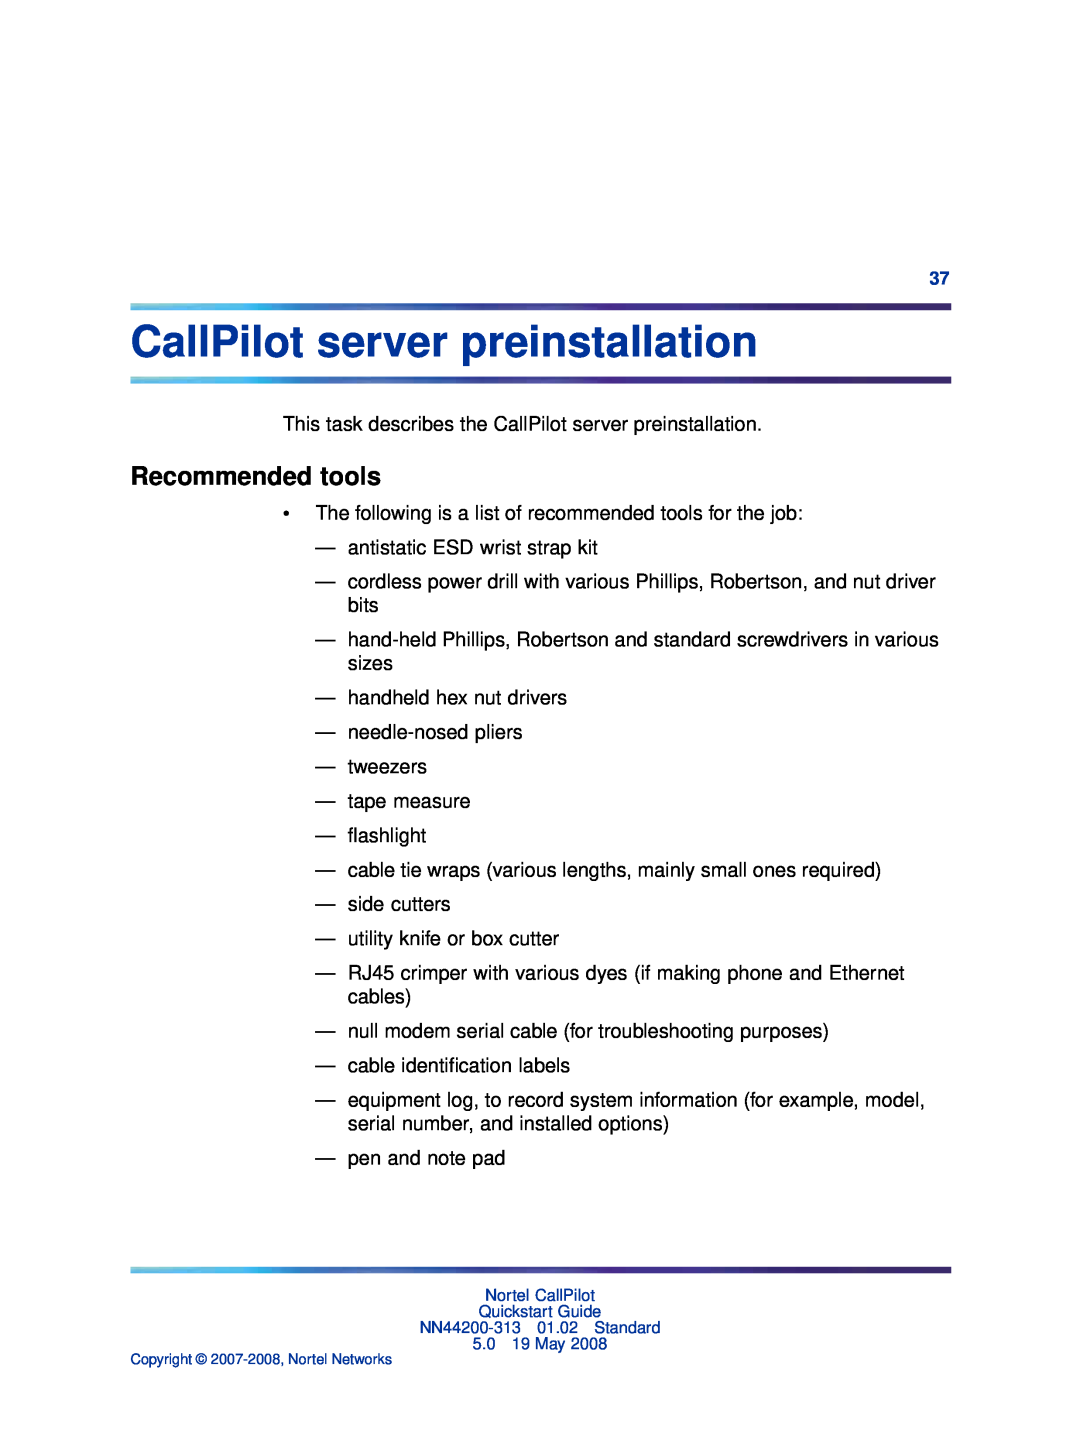 Nortel Networks NN44200-313 quick start CallPilot server preinstallation, Recommended tools 